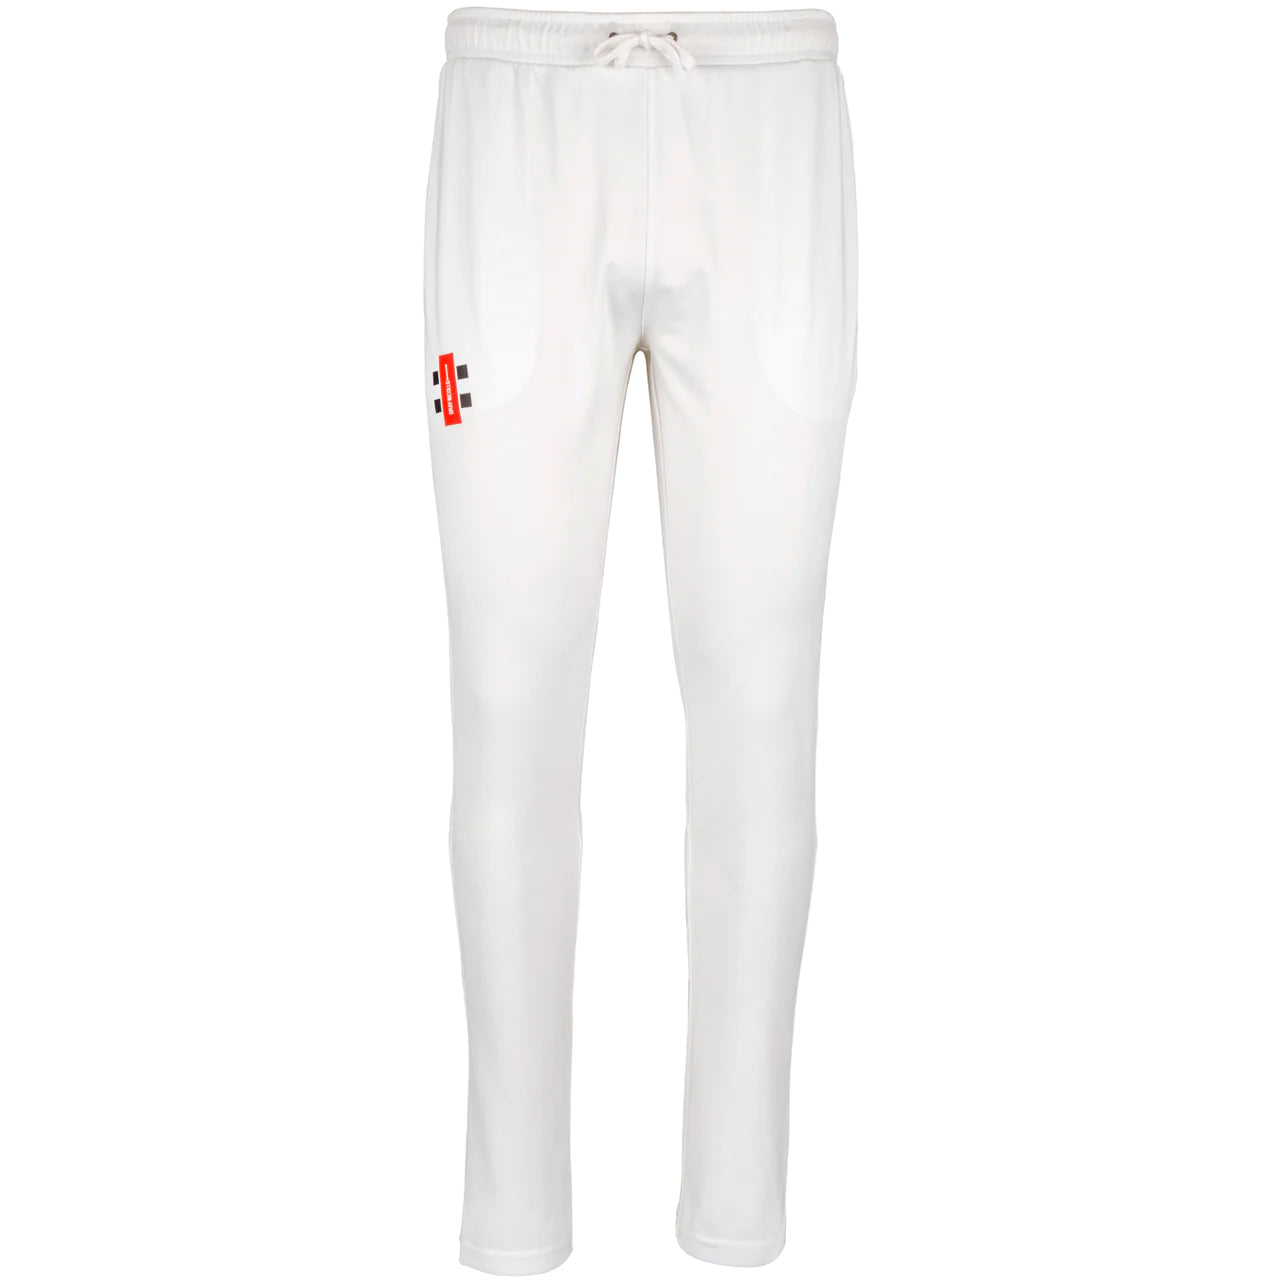 cricket trousers junior - Sportswear Apparels Manufacturer Company